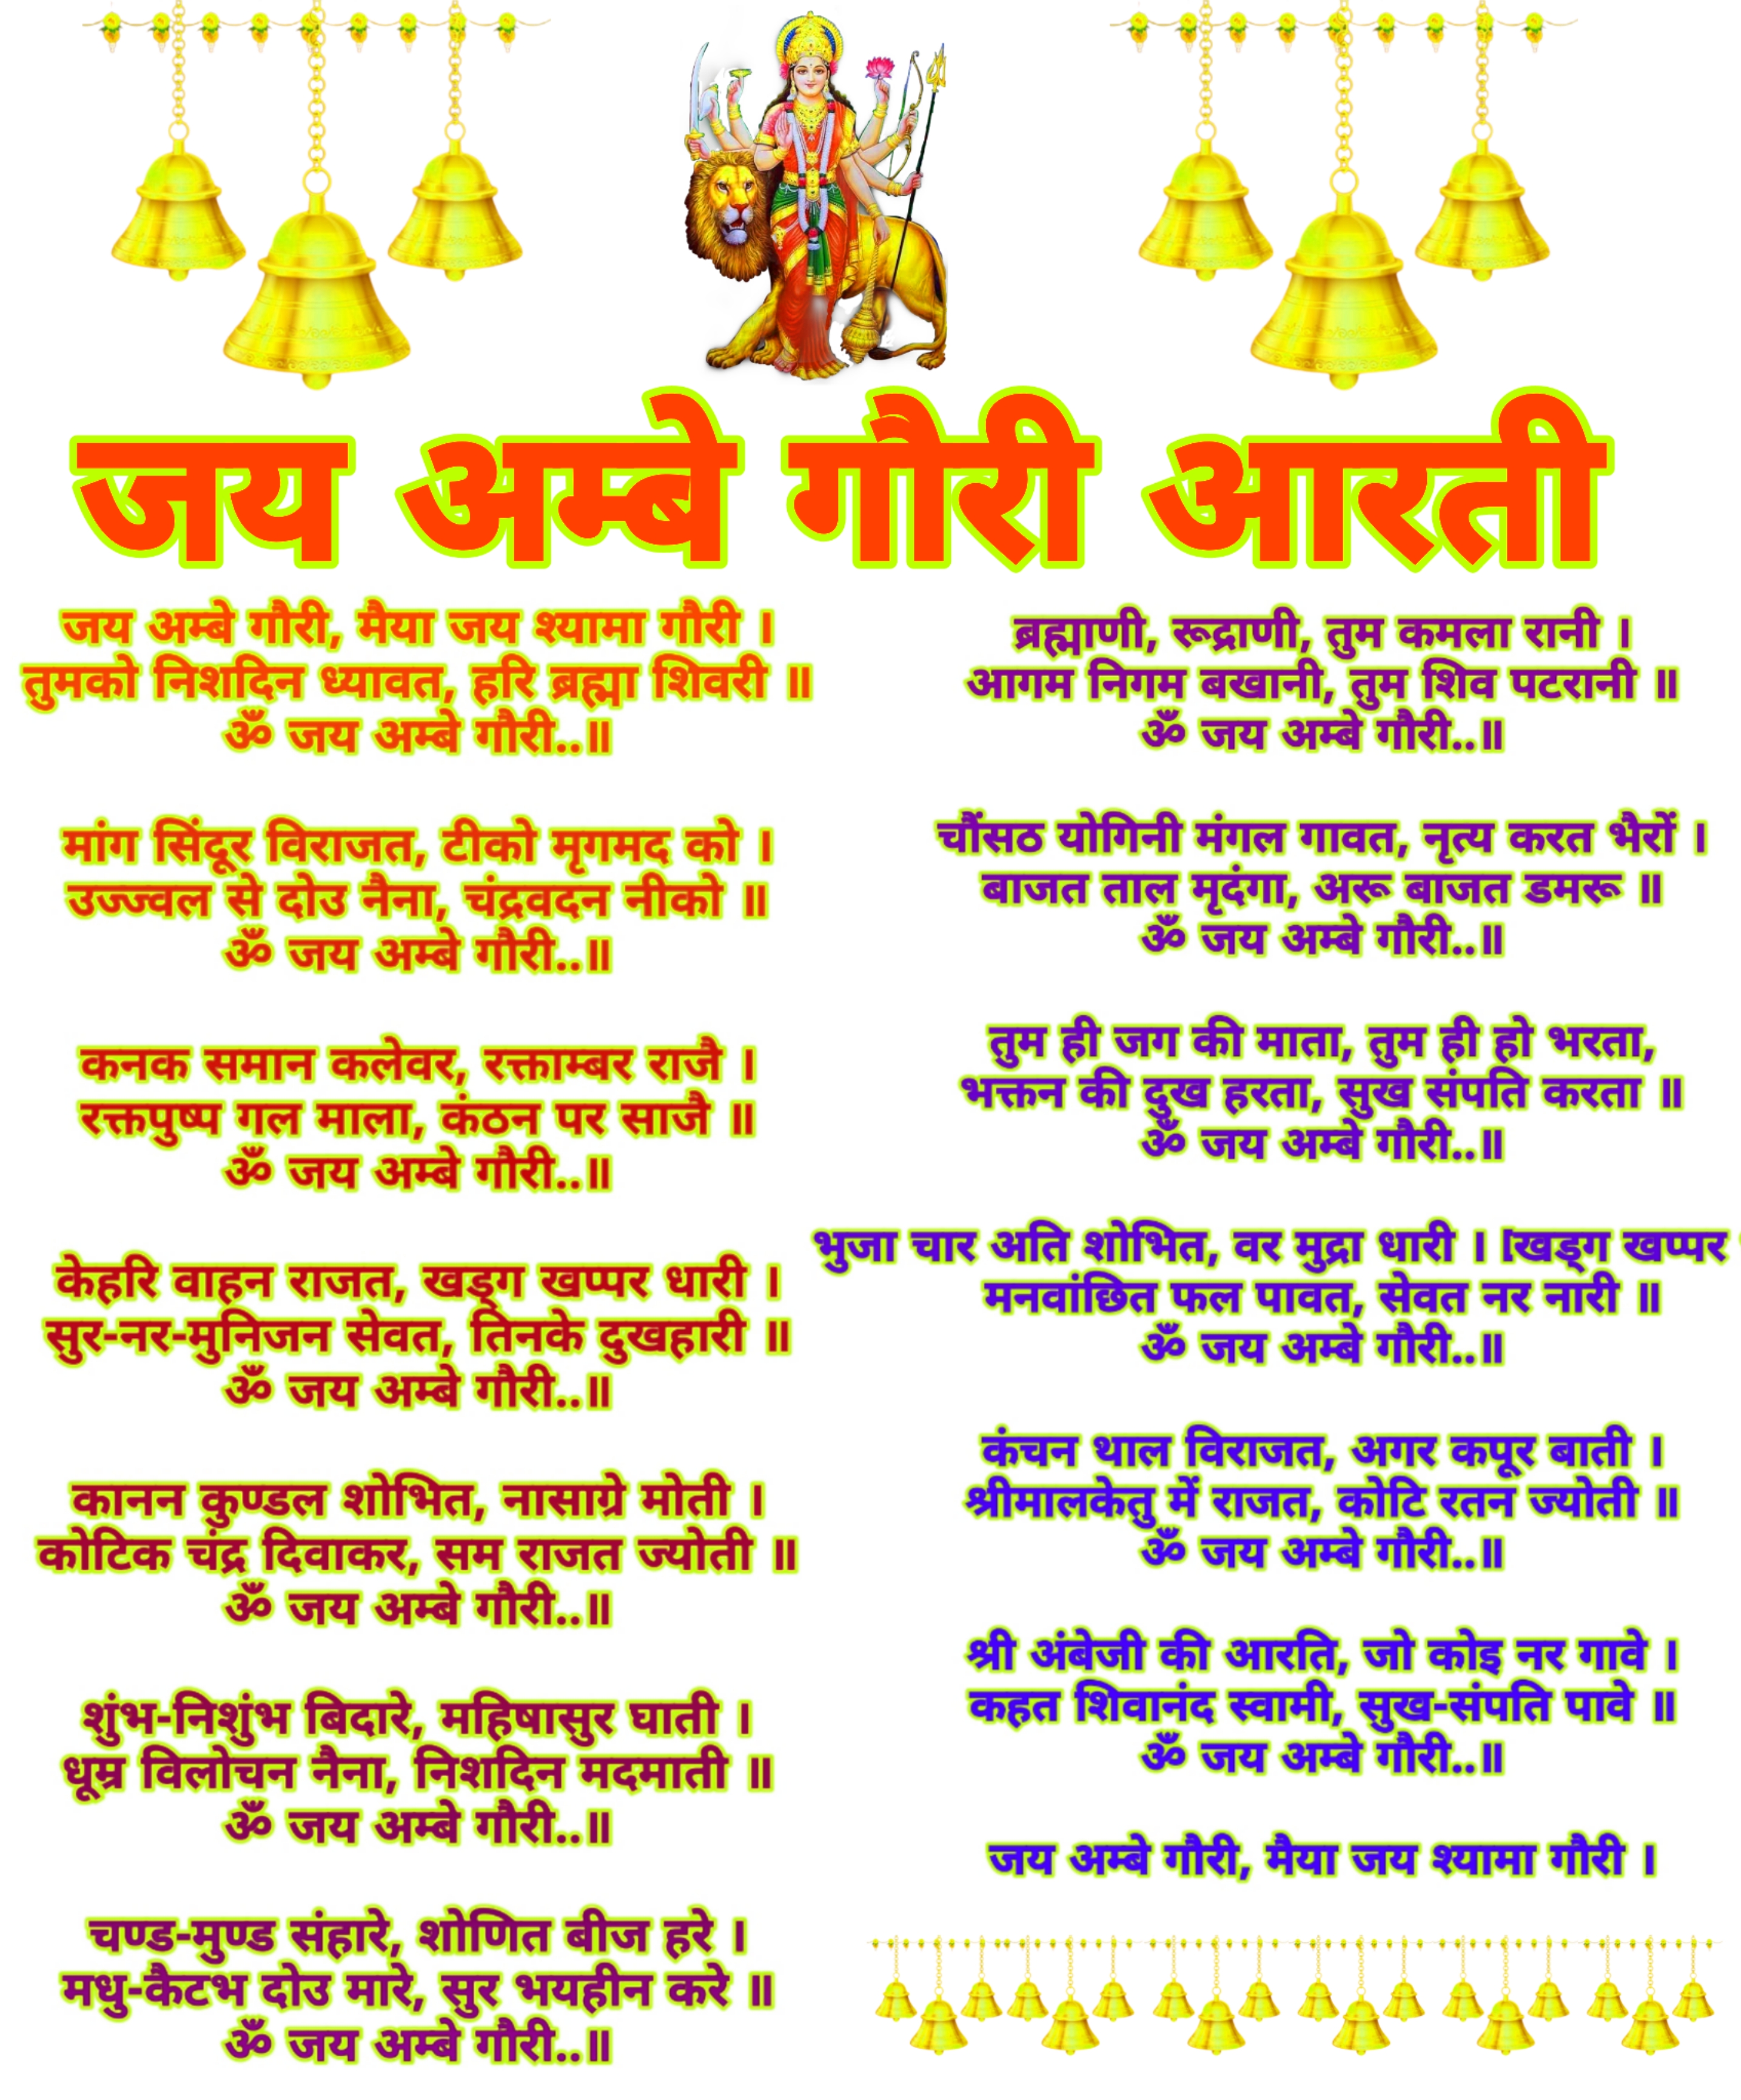 जय अंबे गौरी आरती लिरिक्स इन हिंदी | Jai Ambe Gauri Aarti lyrics in Hindi image